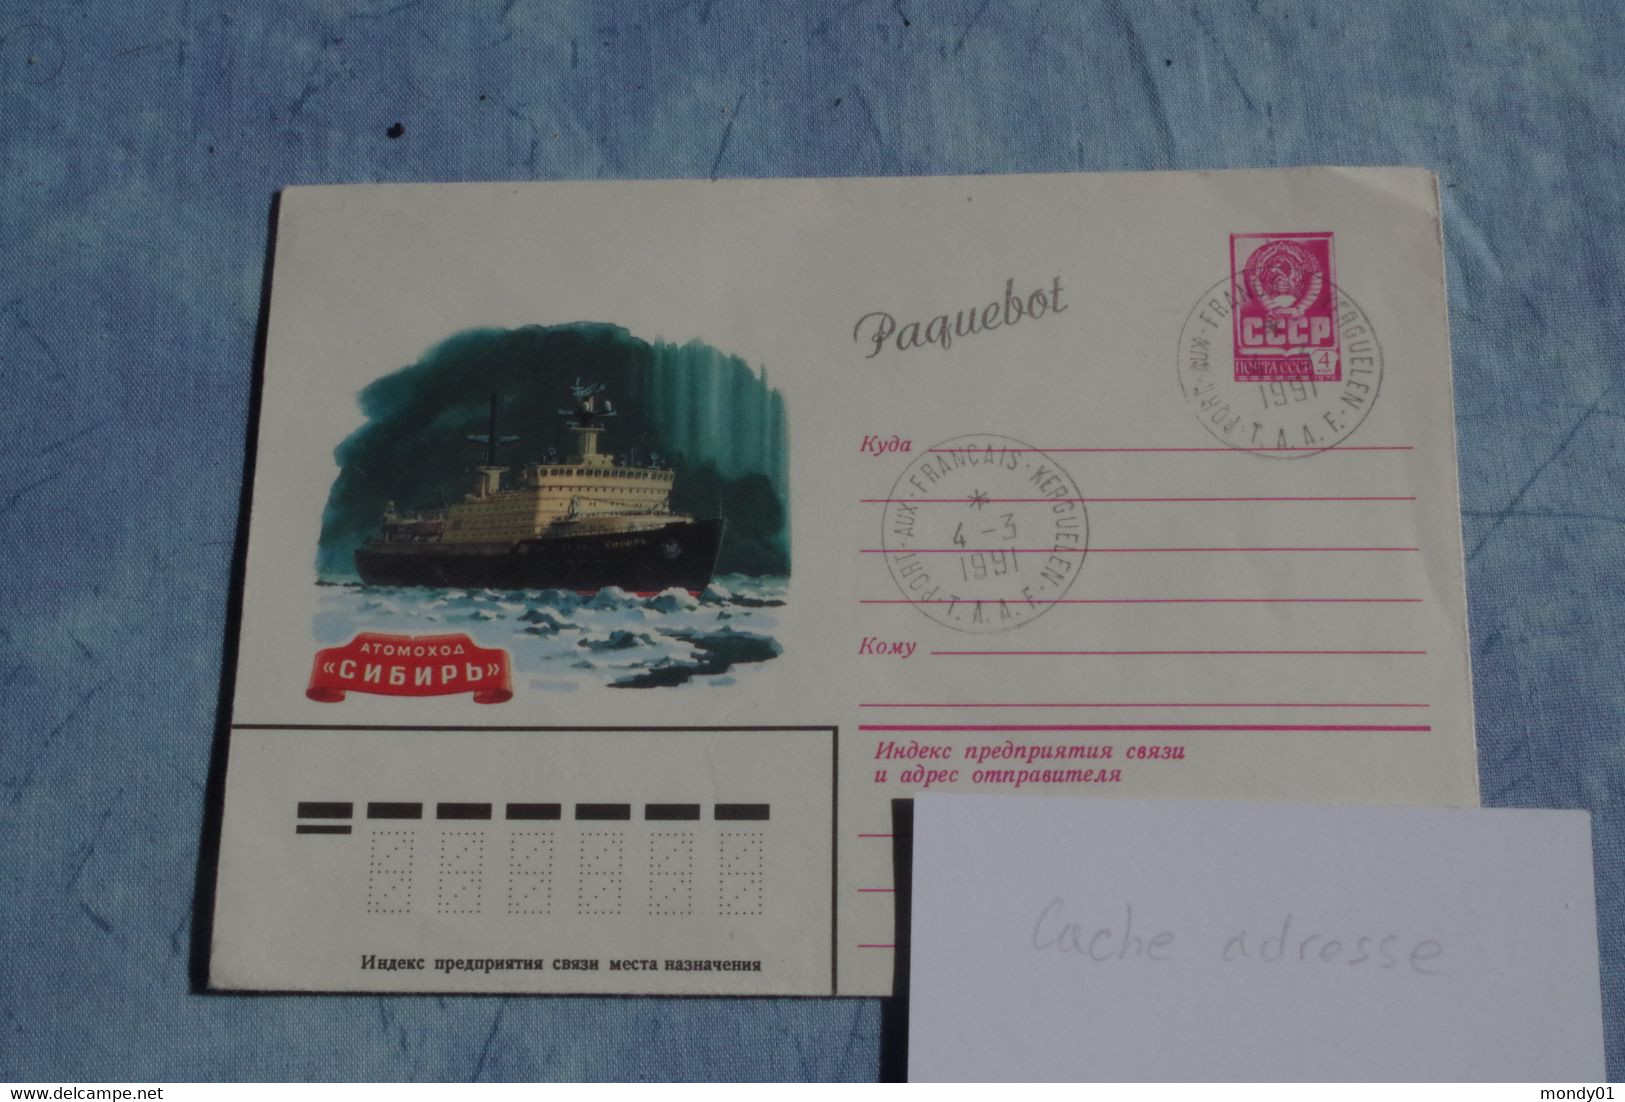 5-776  Paquebot Kerguelen 4 Mars 1991  Entier Poste URSS Navire Atomic TAAF FAAT Atome énergie Nucléaire - Esploratori E Celebrità Polari